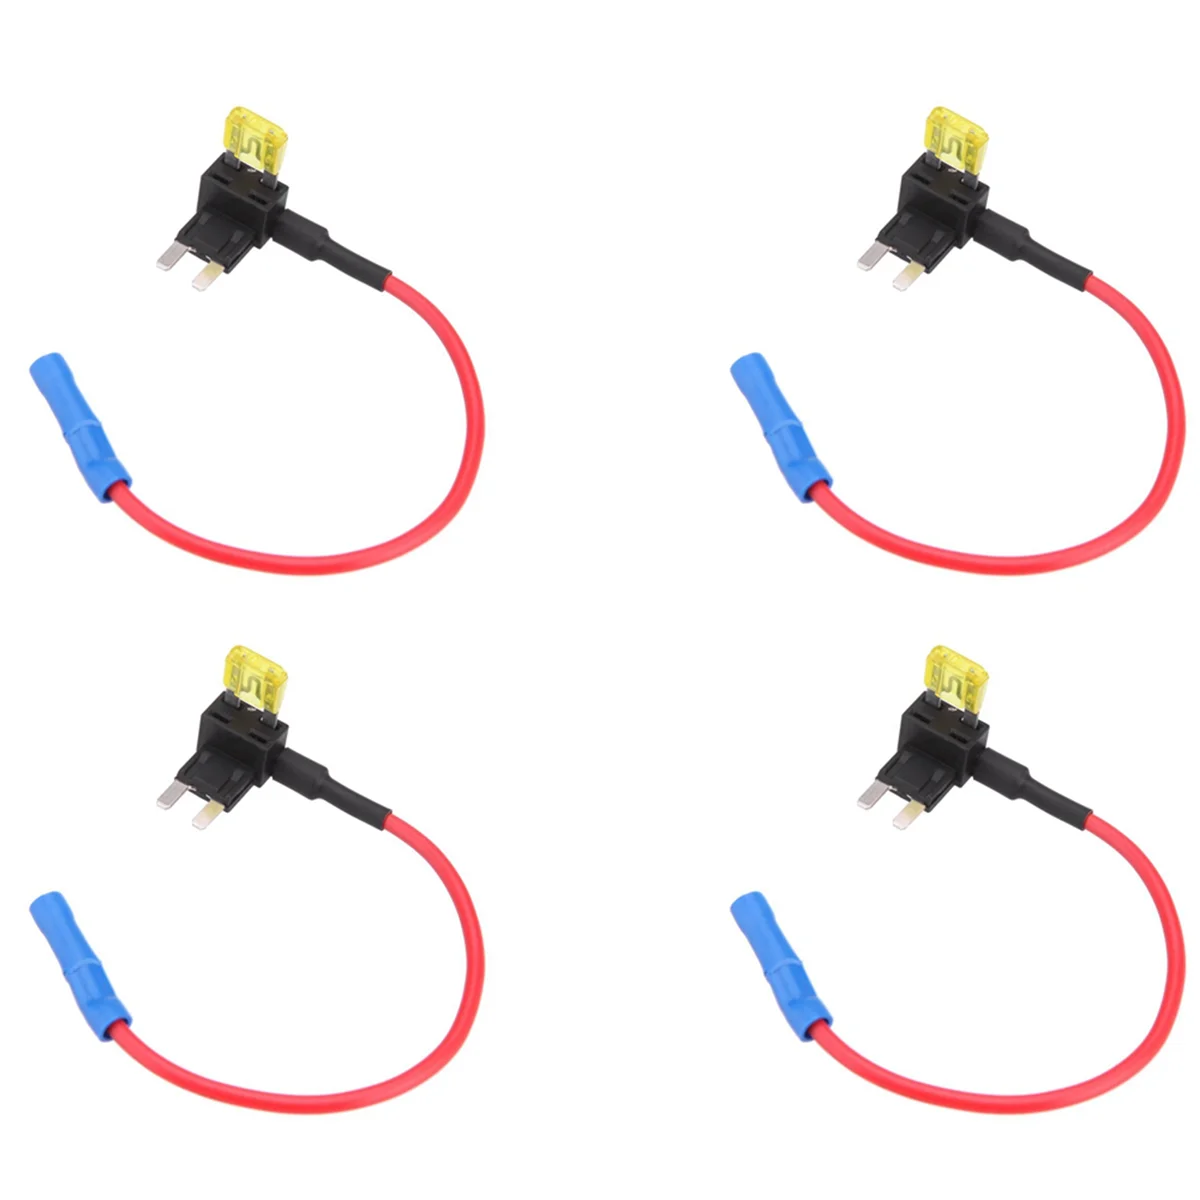 

4X 2-Insert Blade Fuse Adapter Voltage Tap for Automotive Fuses APS ATT Mini Low Profile